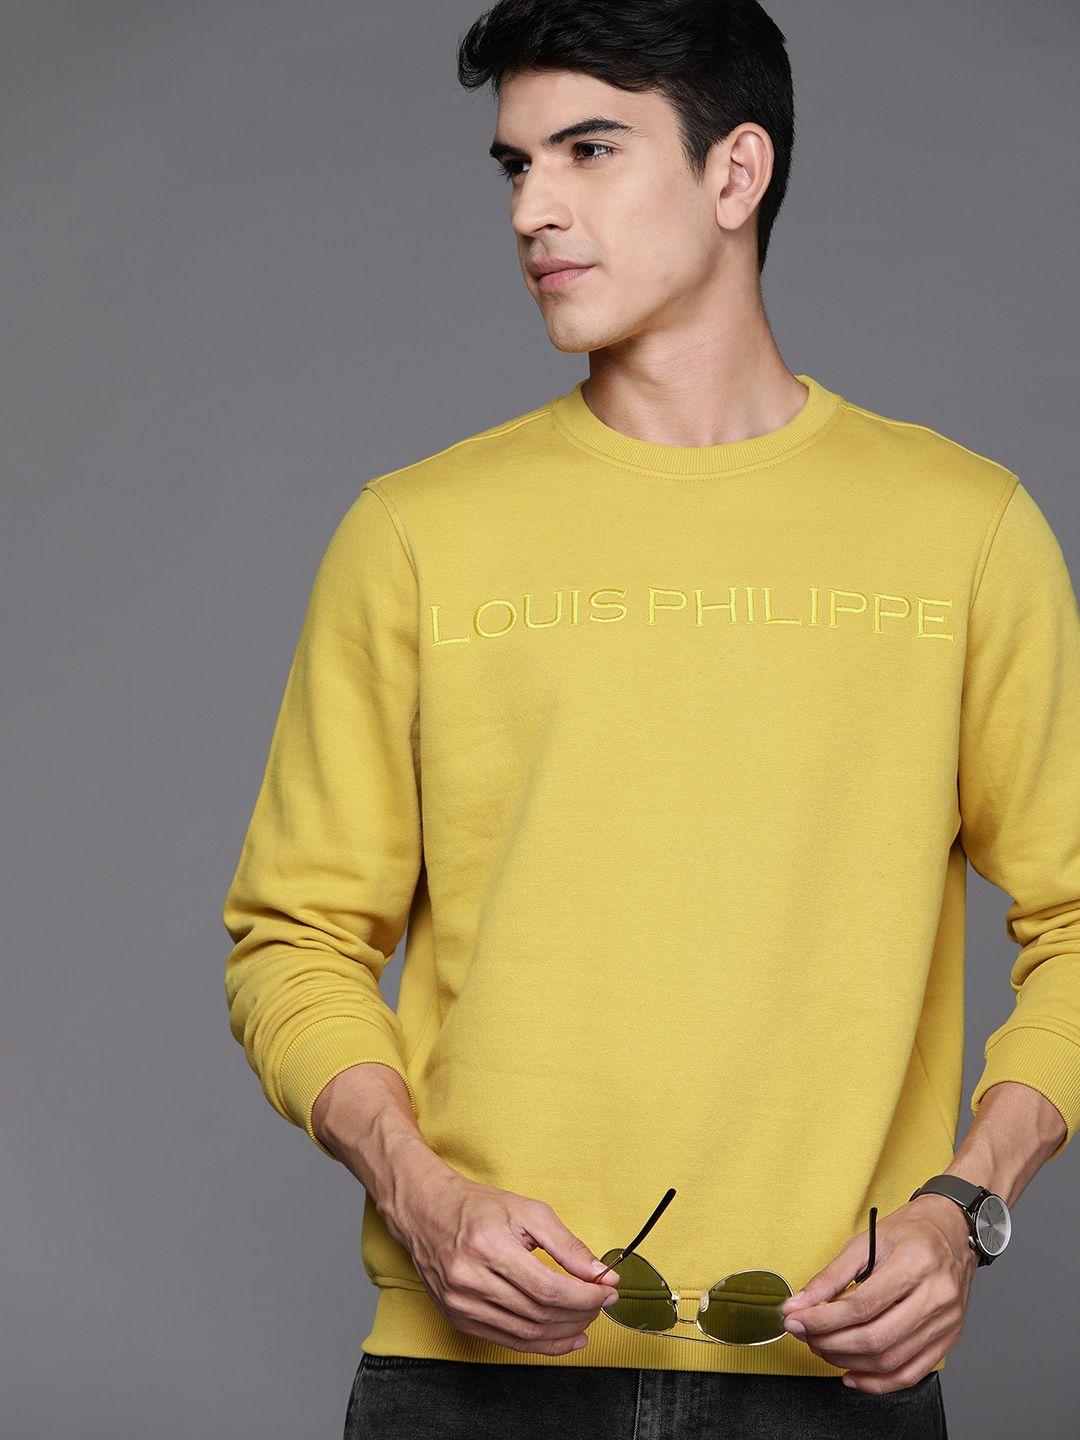 louis philippe embroidered sweatshirt